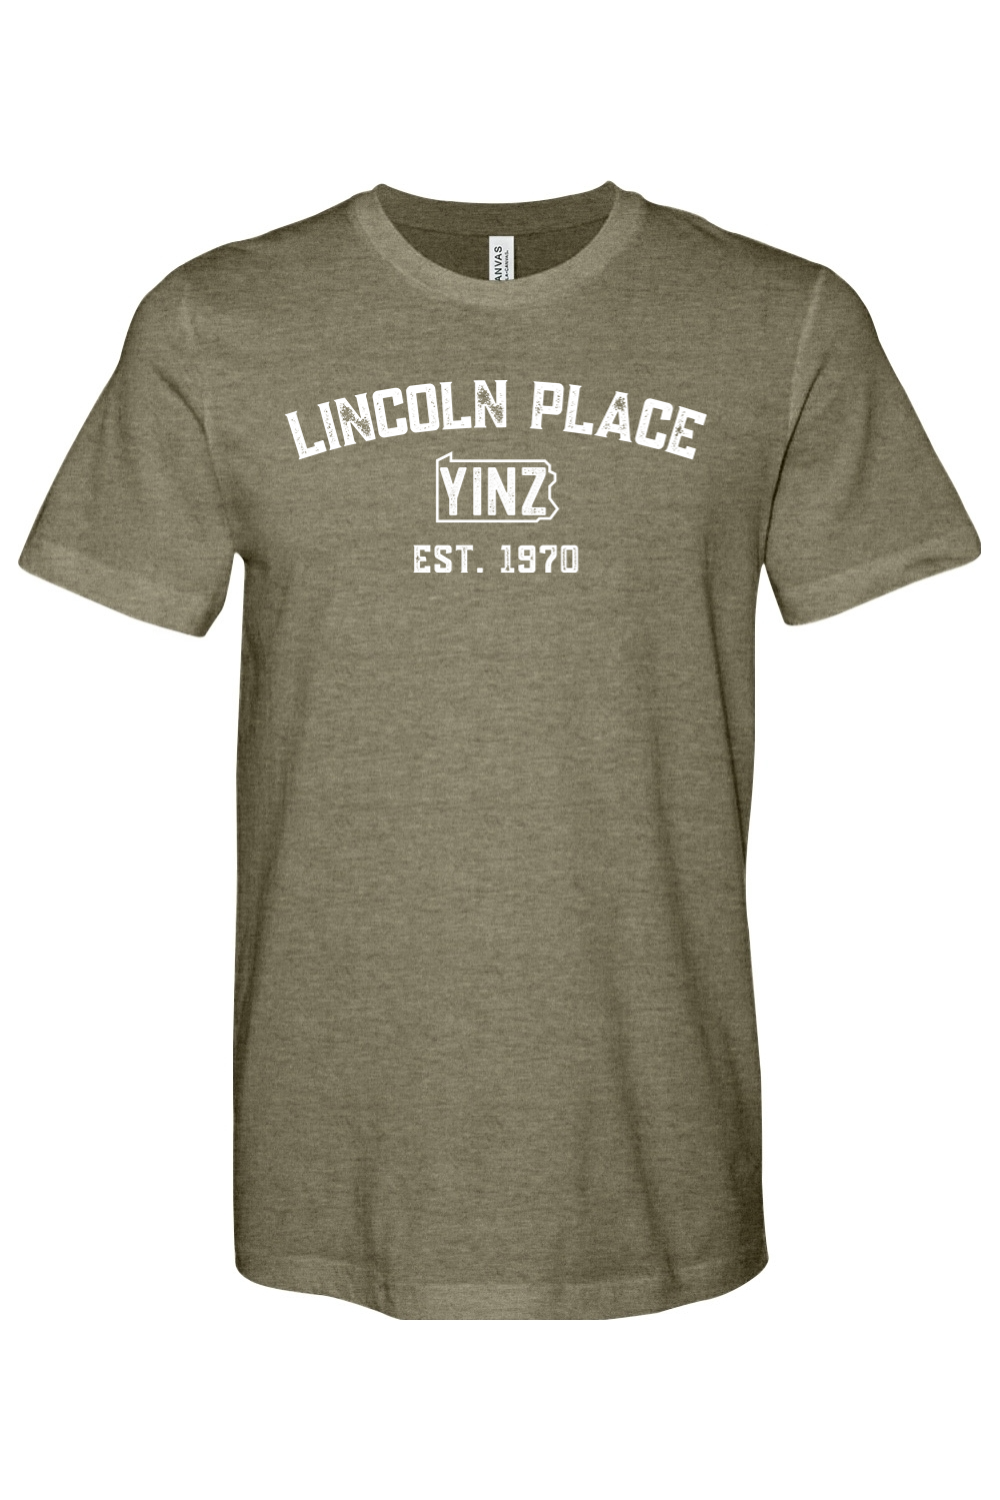 Lincoln Place Yinzylvania - Yinzylvania